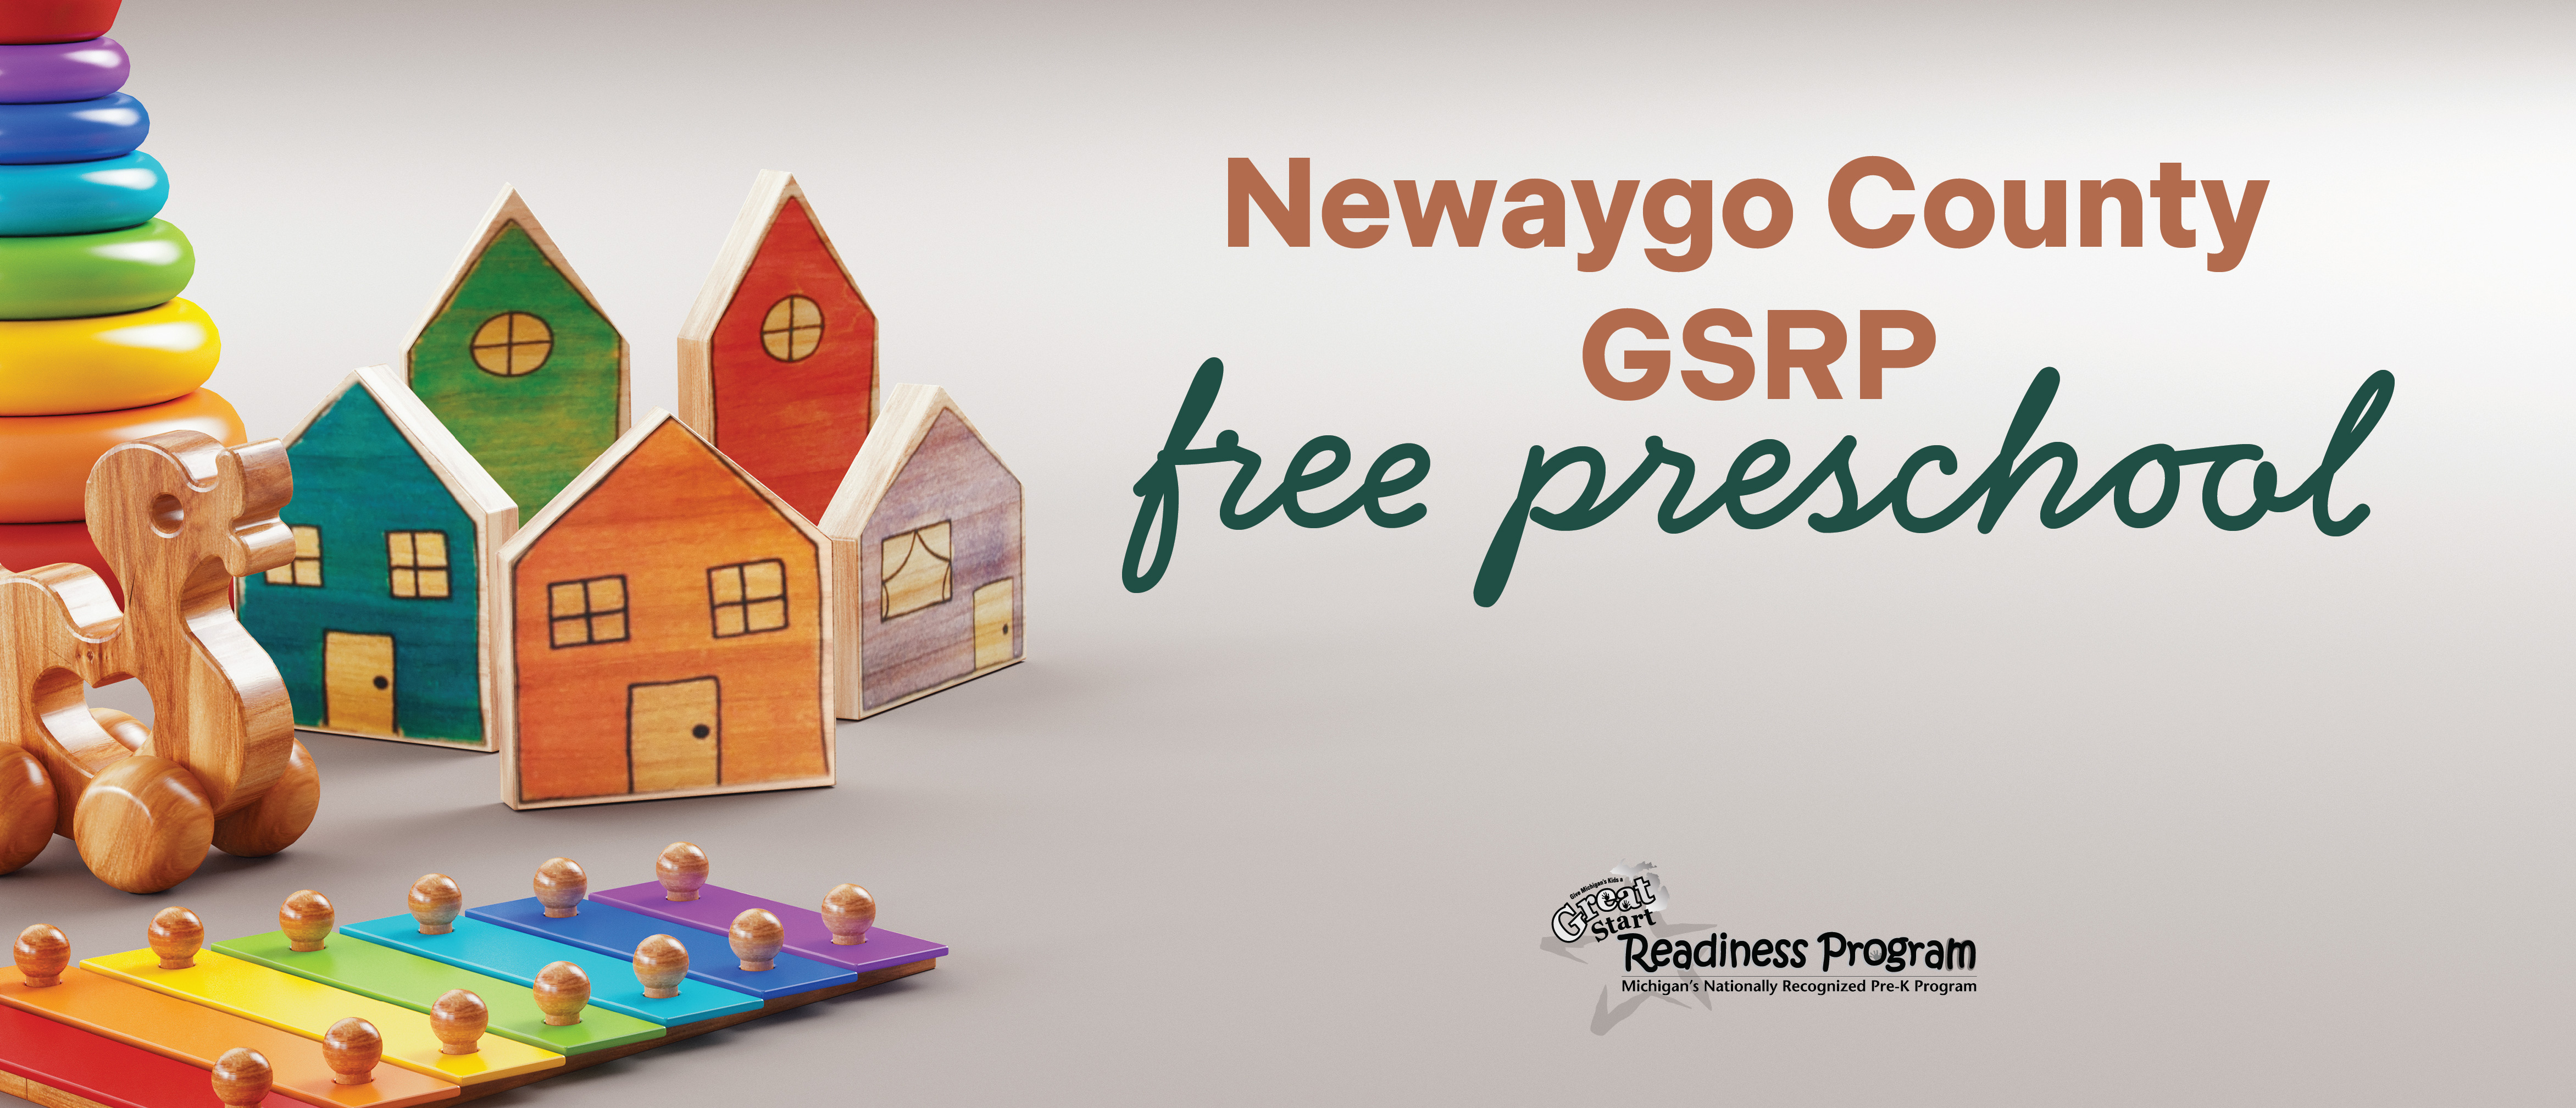 Newaygo County Great Start Readiness Program. Free preschool.